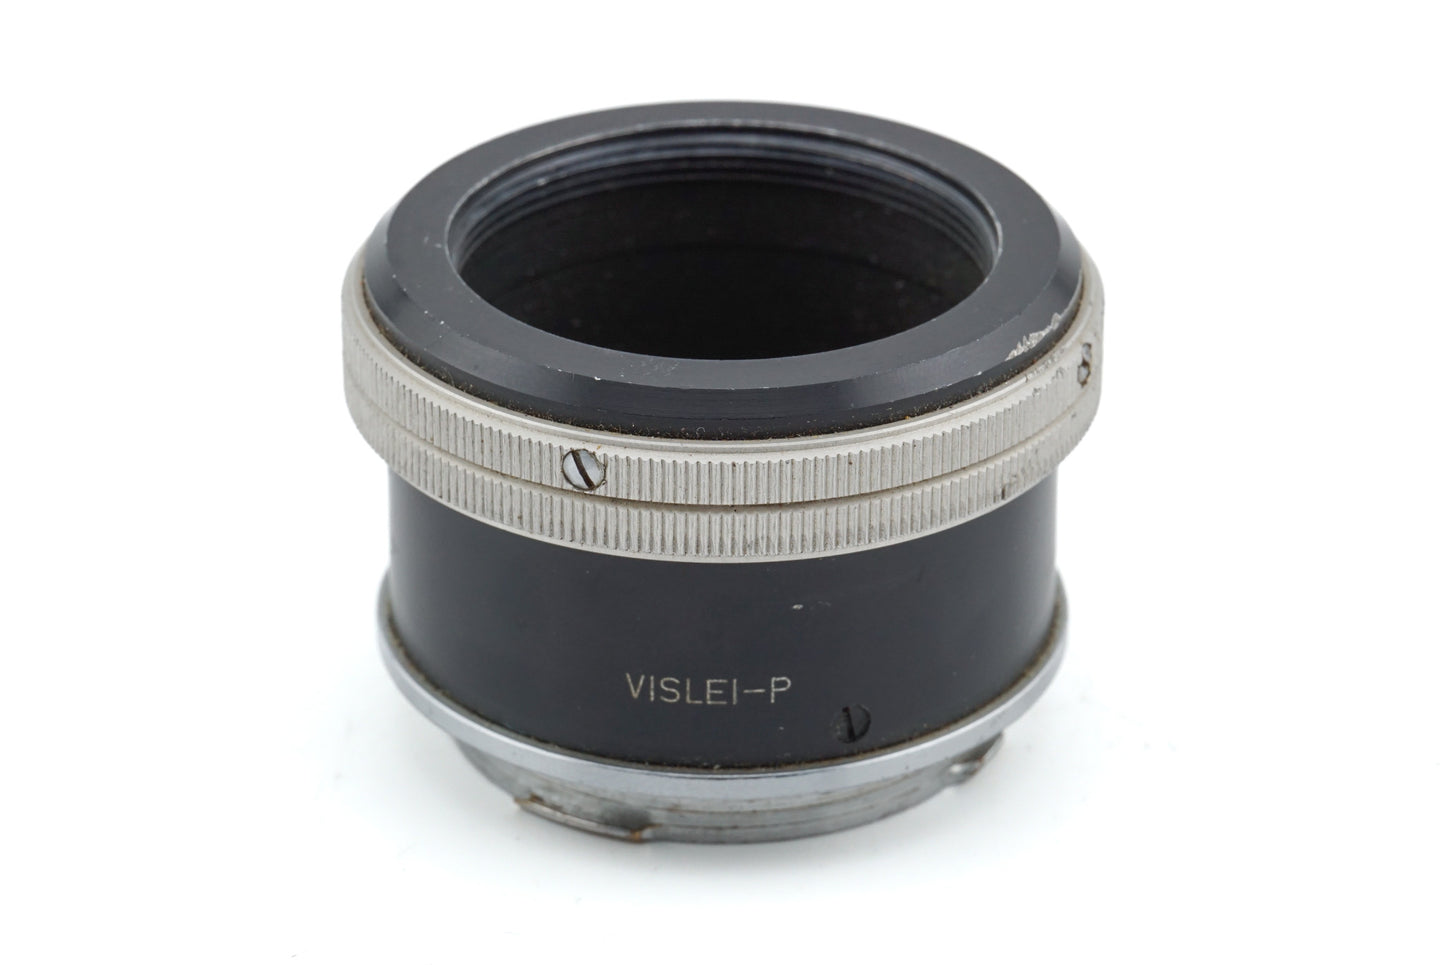 Novoflex M39 Universal Bellows - Visoflex II/III Adapter (VISLEI-P) - Lens Adapter